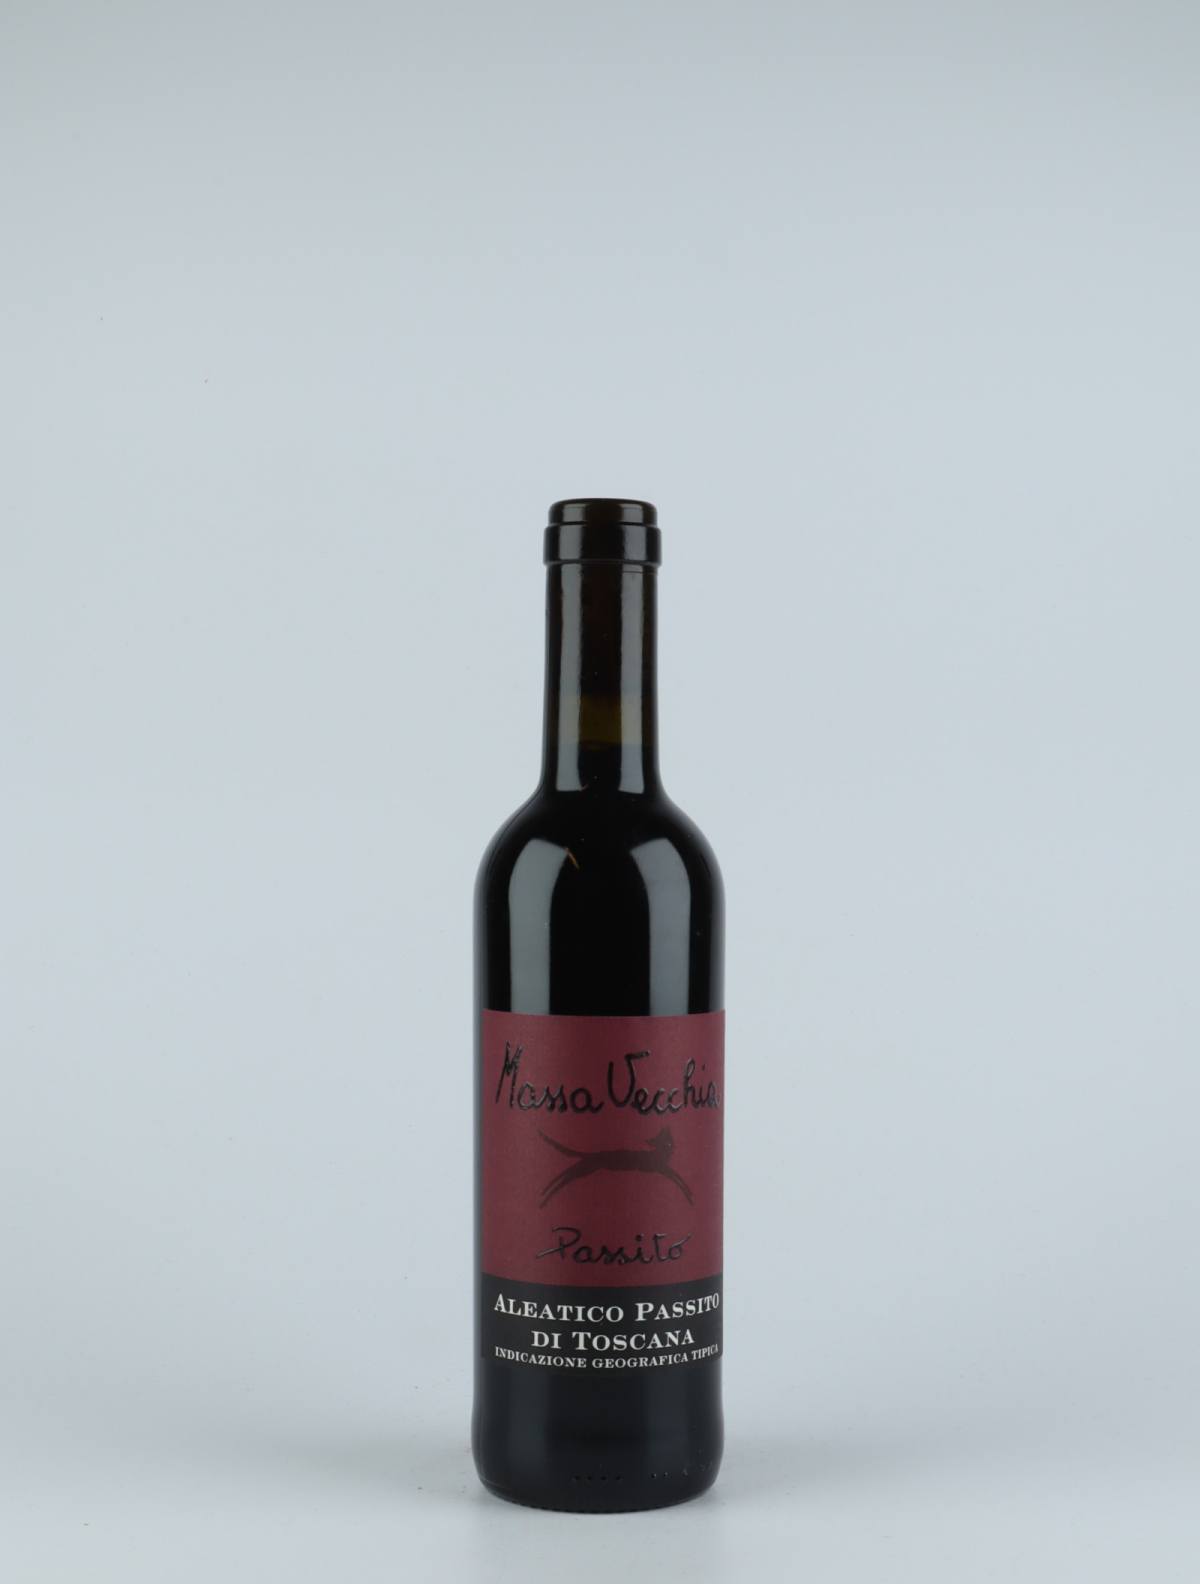 A bottle 2015 Passito Aleatico Sweet wine from Massa Vecchia, Tuscany in Italy